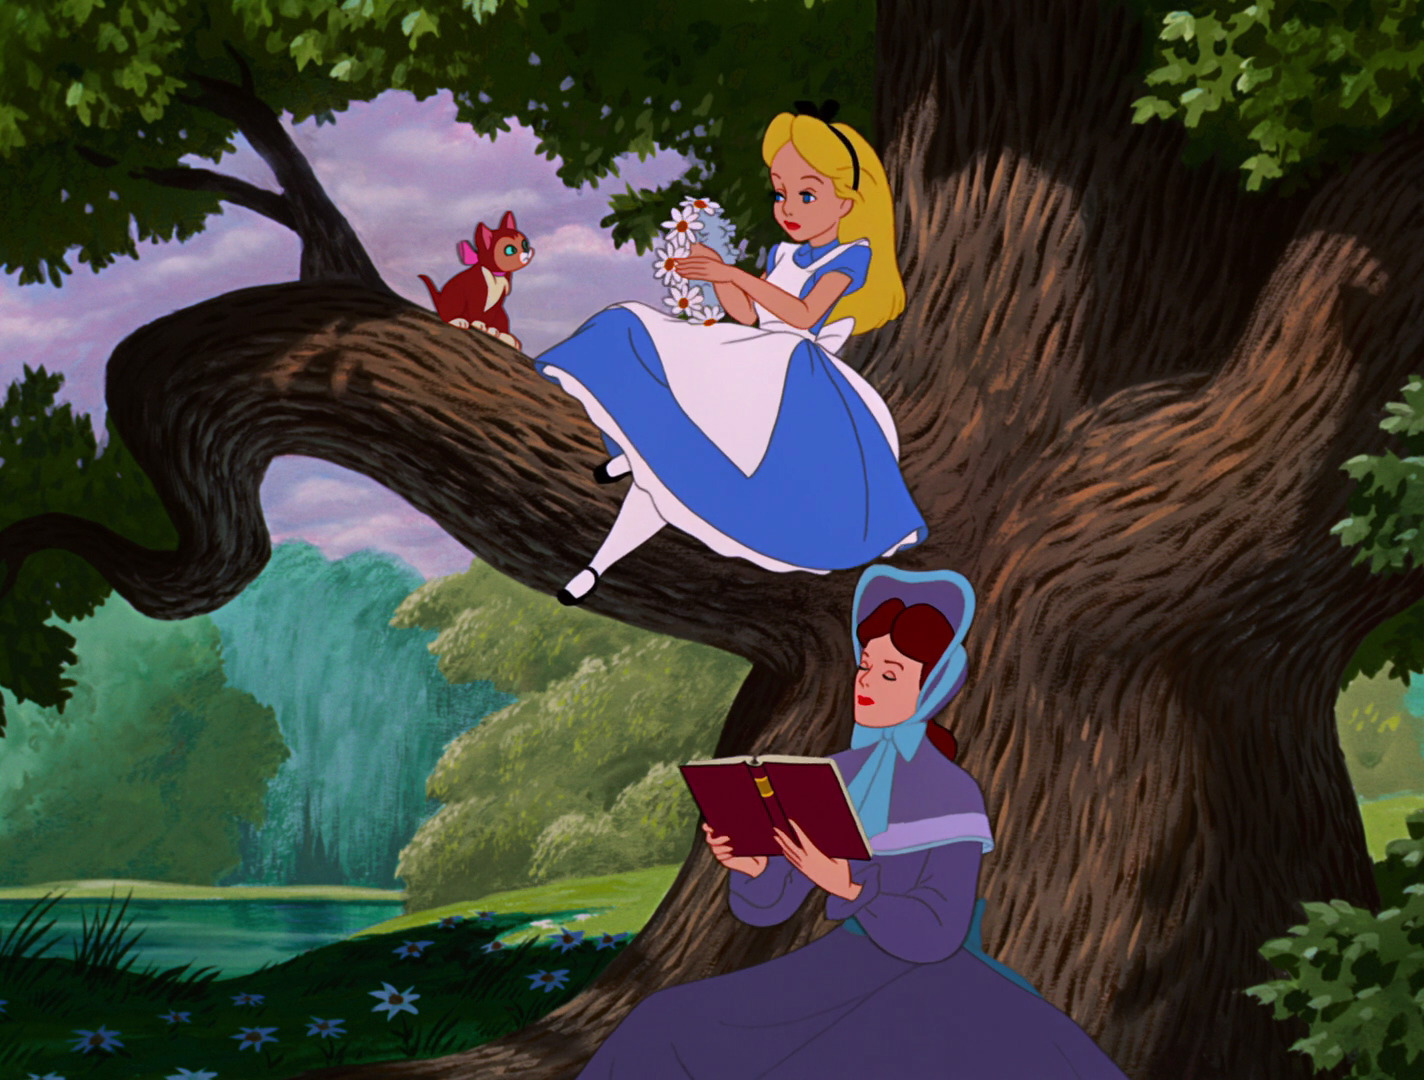 Beginning Scene of Alice in Wonderland